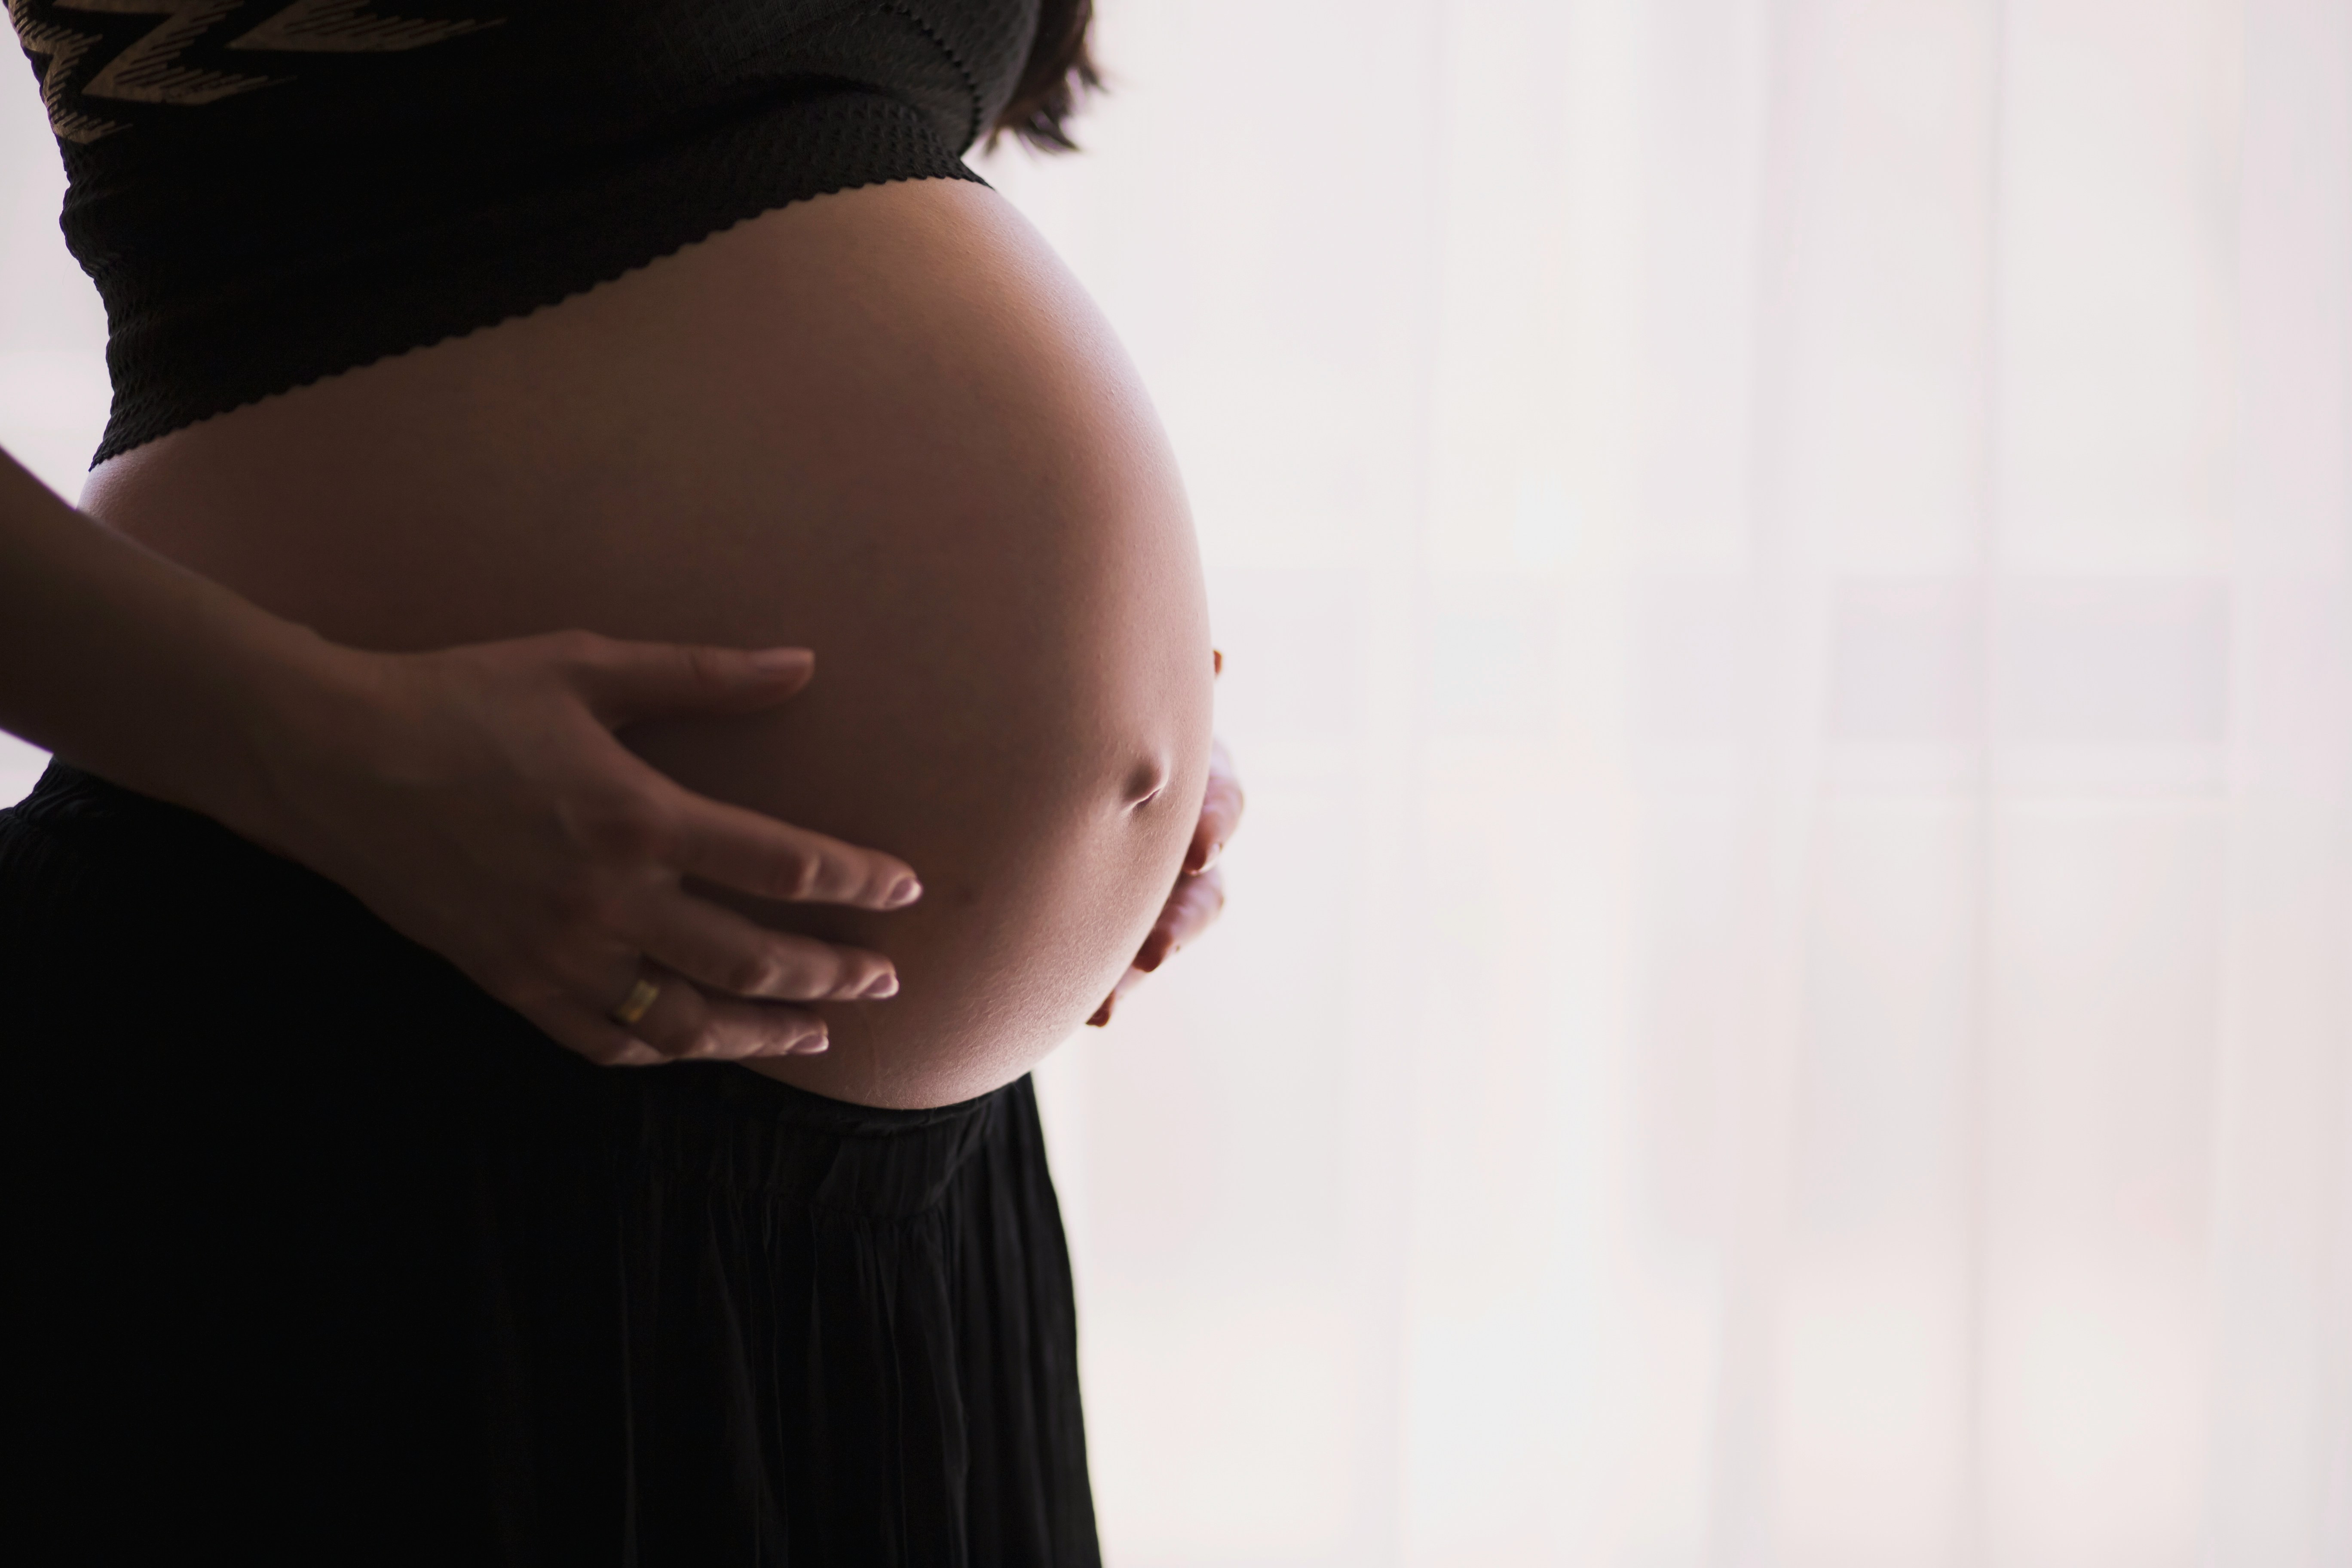 A pregnant woman's belly | Source: Unsplash